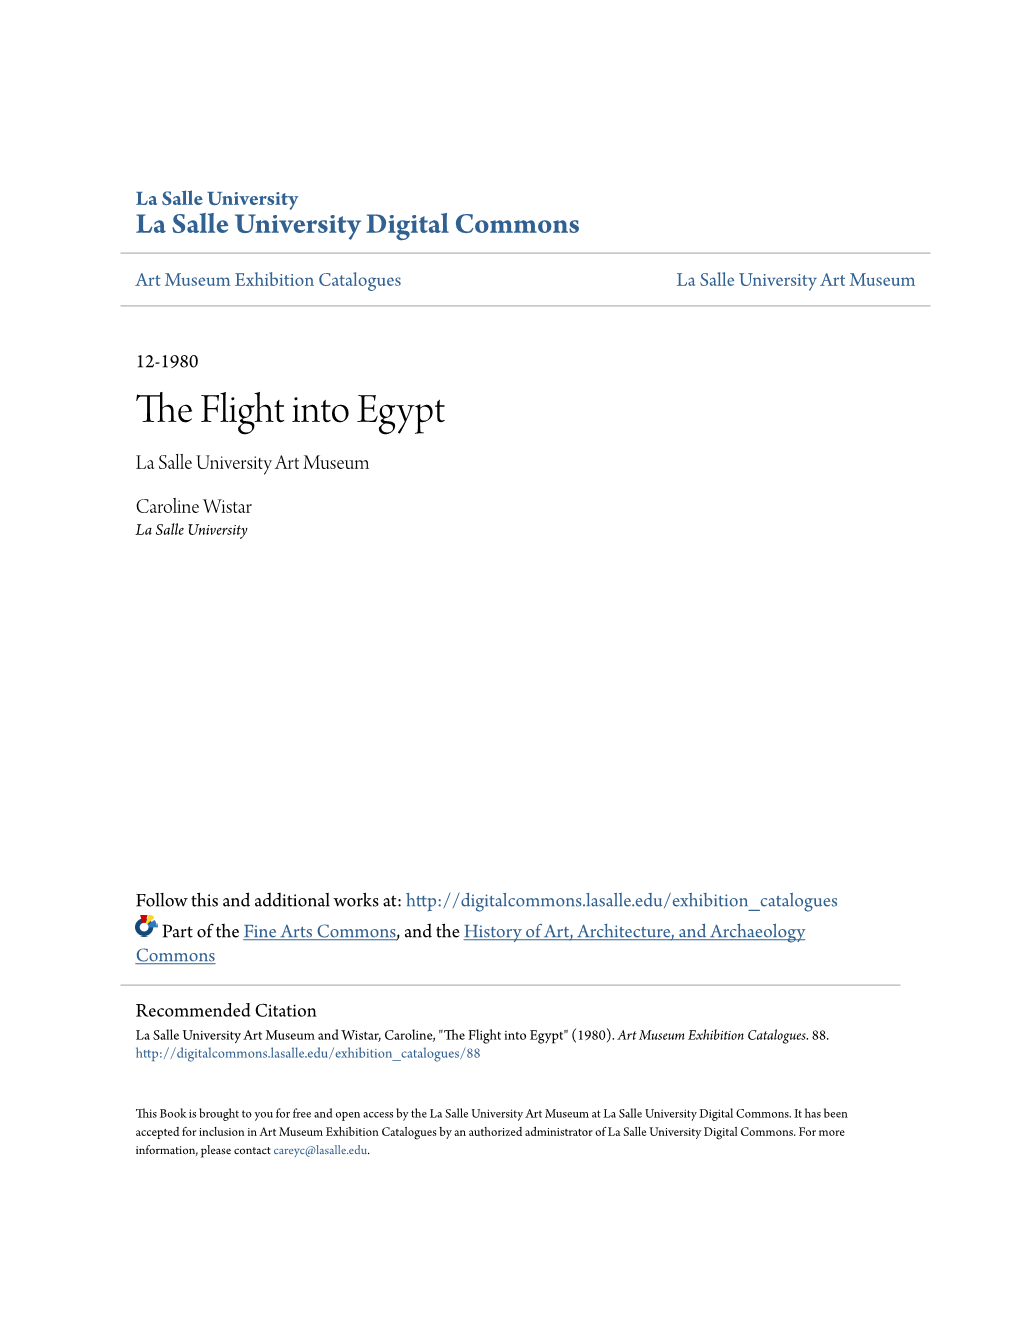 The Flight Into Egypt" (1980)